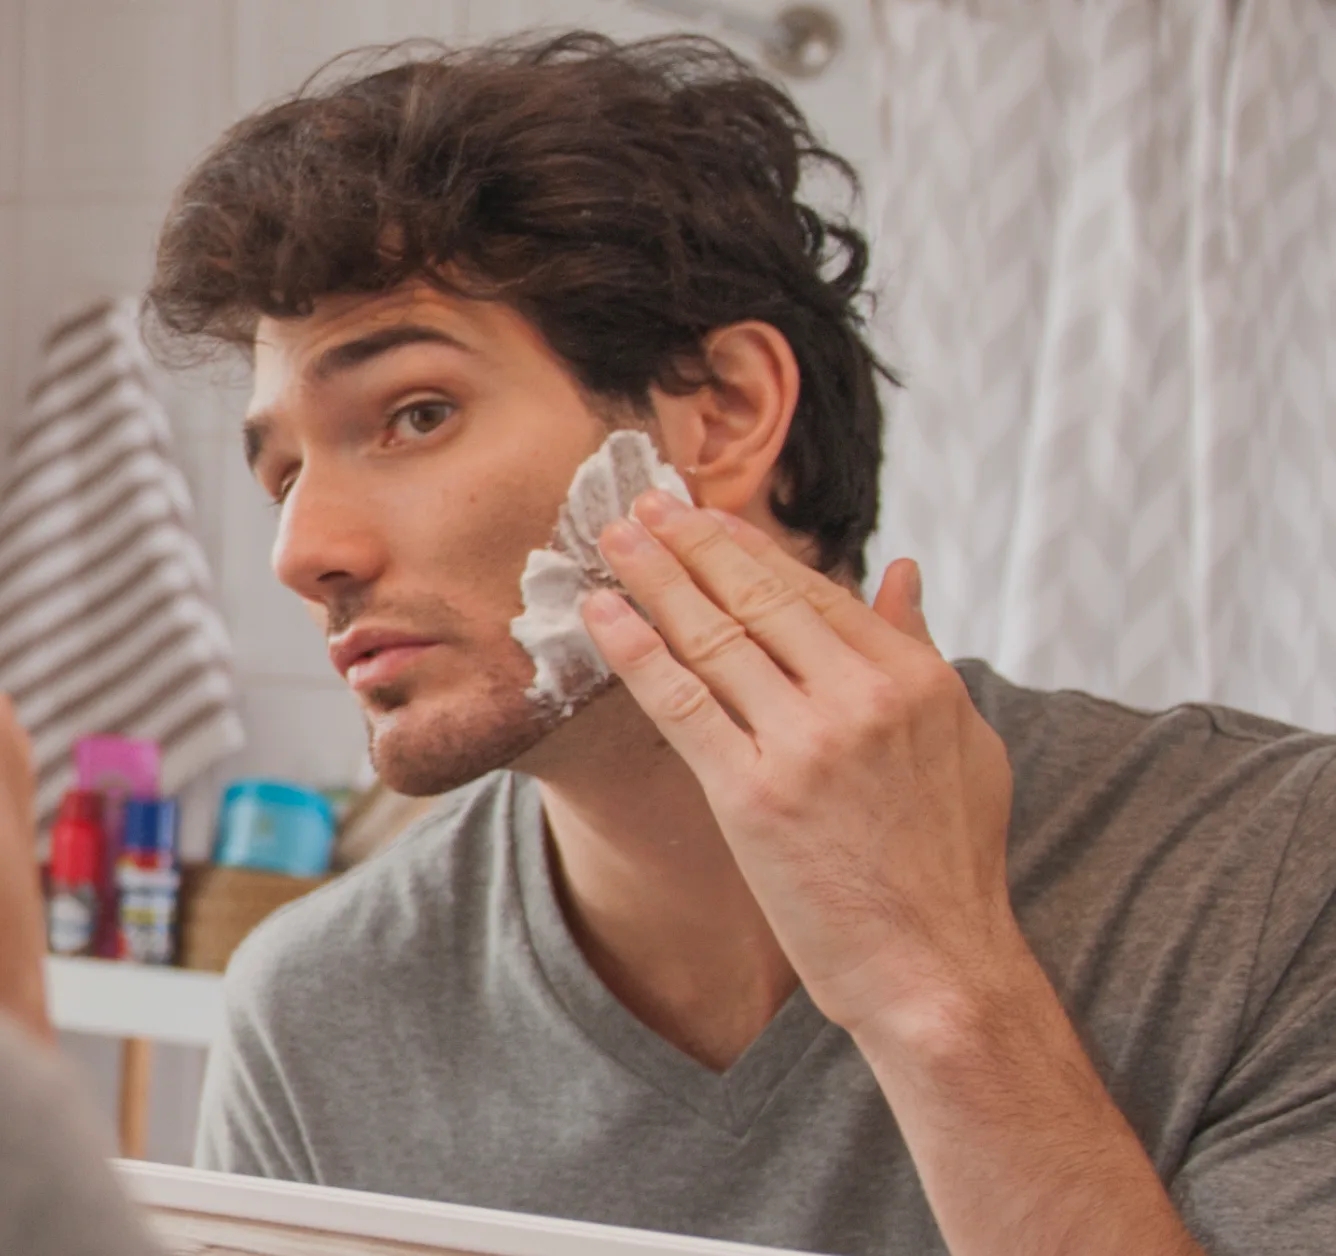 Gel de barbear Gillette para pele sensível